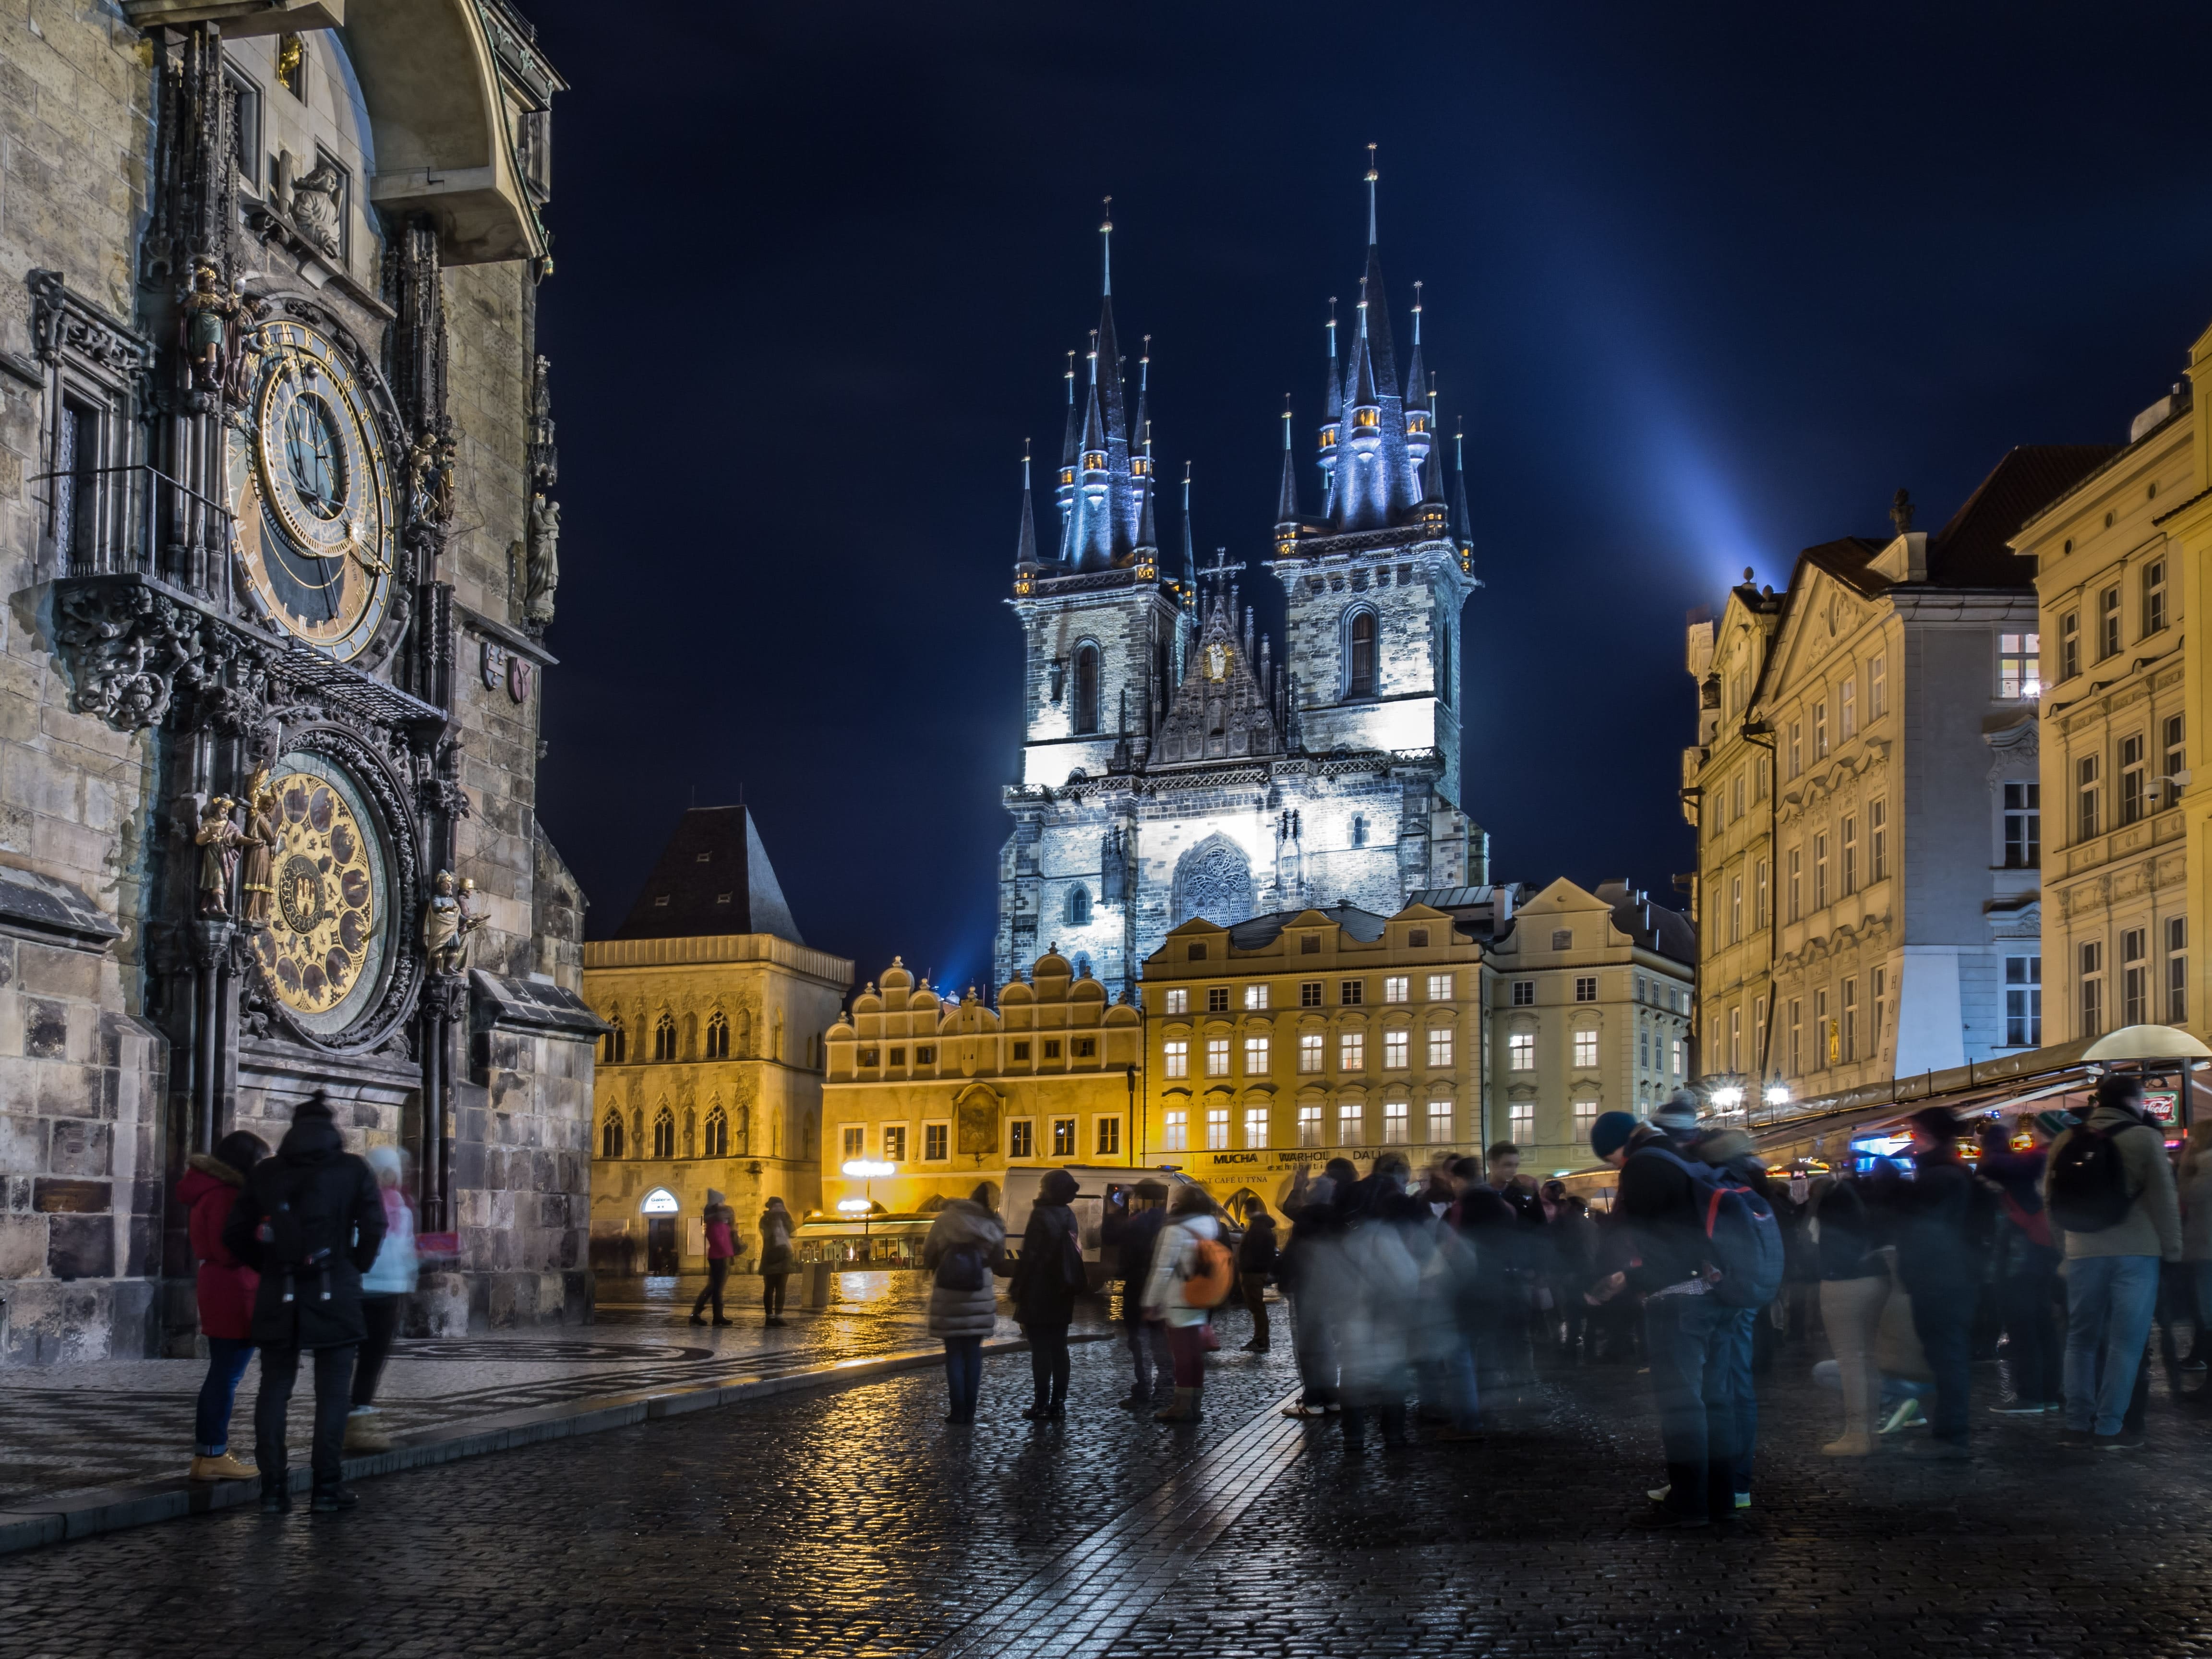 The Astronomical clock in Prague, Czech Republic PEO 